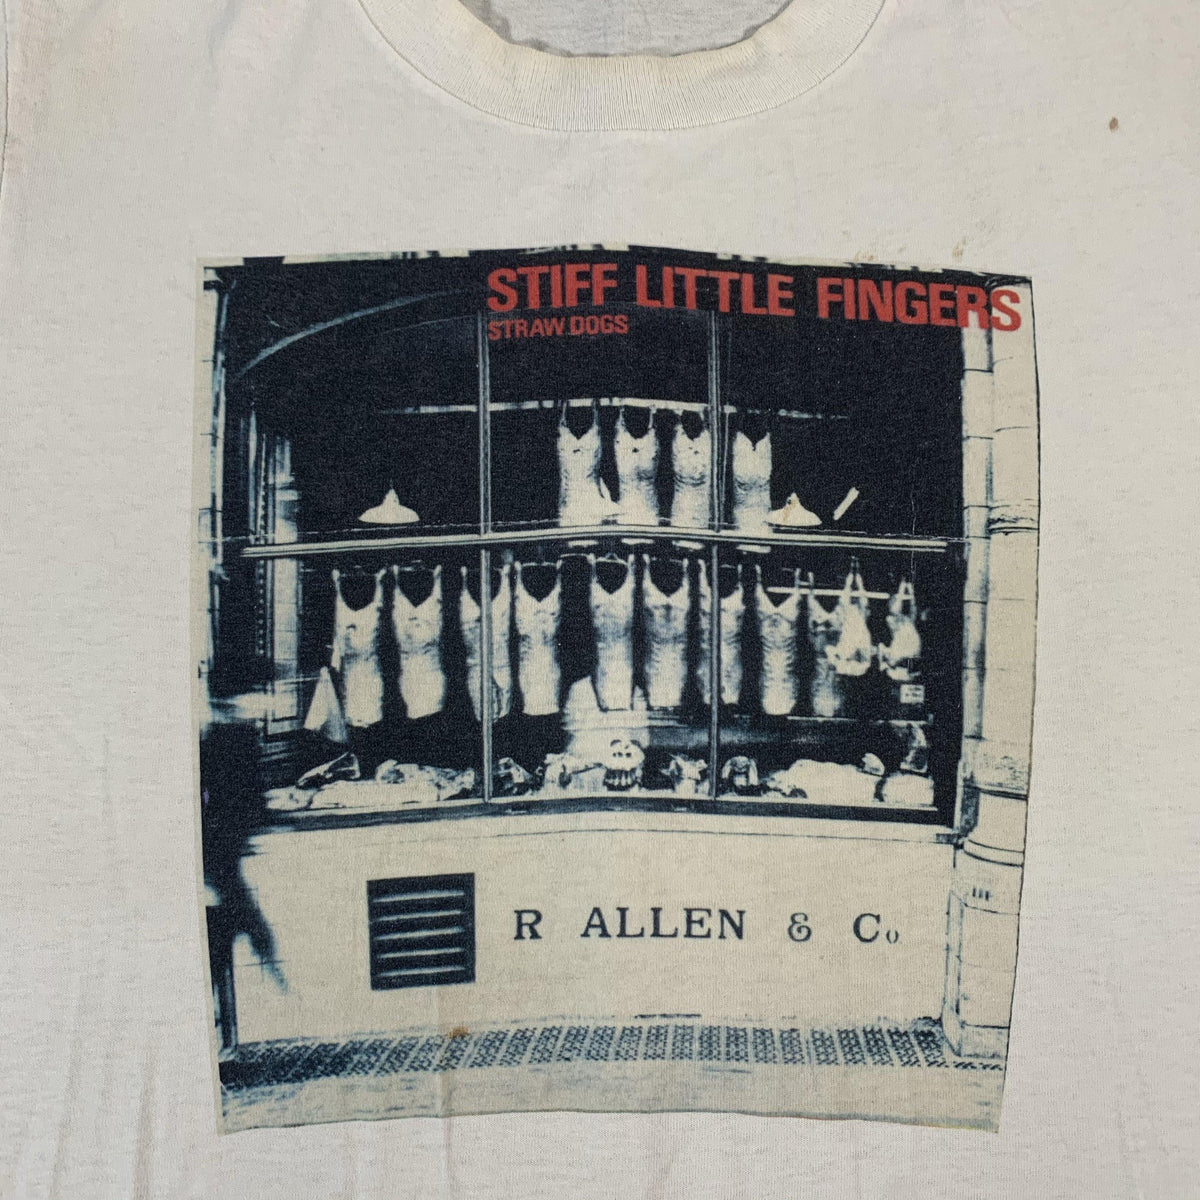 Vintage Stiff Little Fingers “Straw Dogs” T-Shirt - jointcustodydc